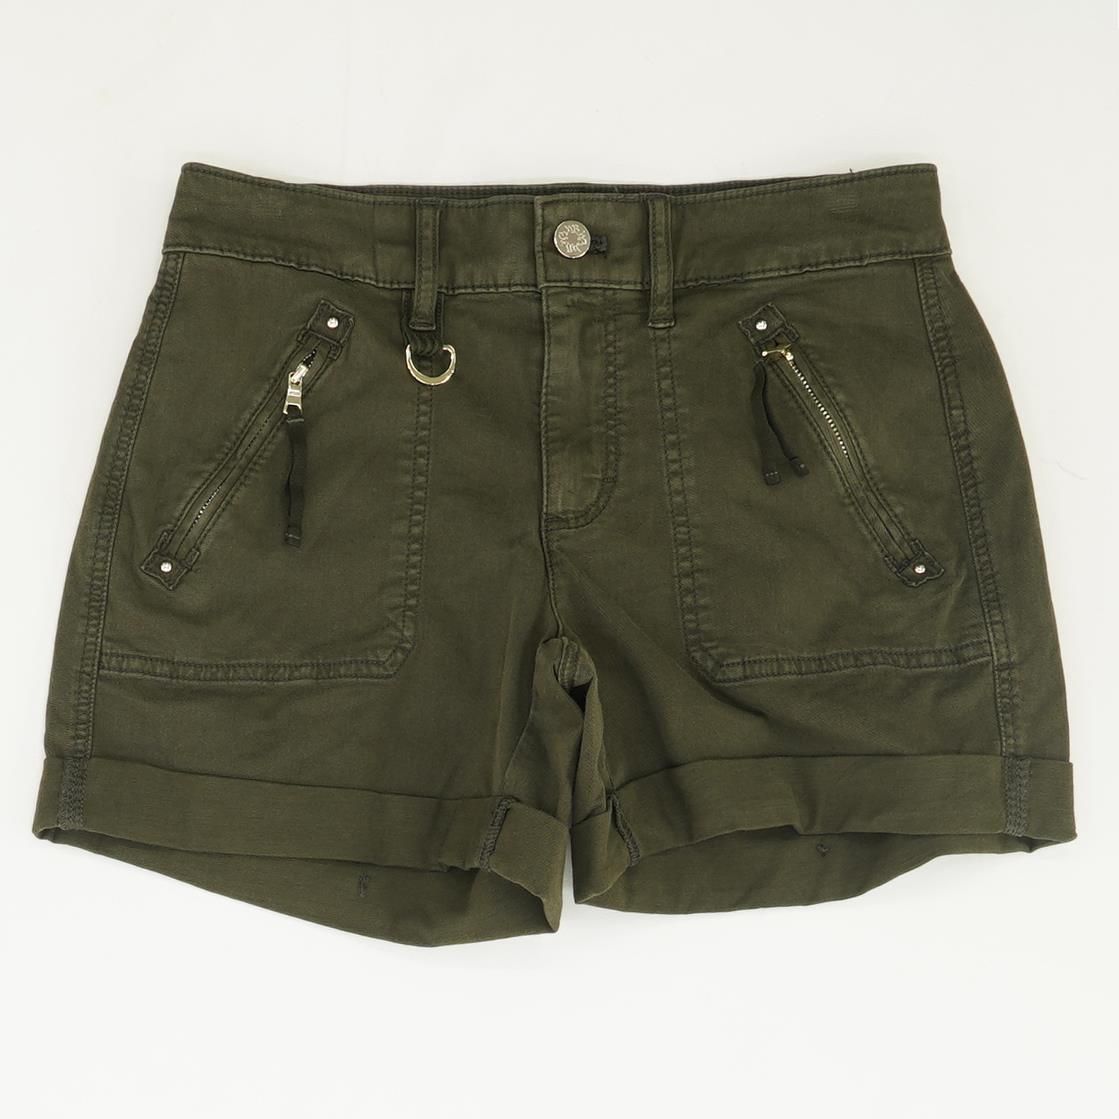 Green Solid Khaki Shorts